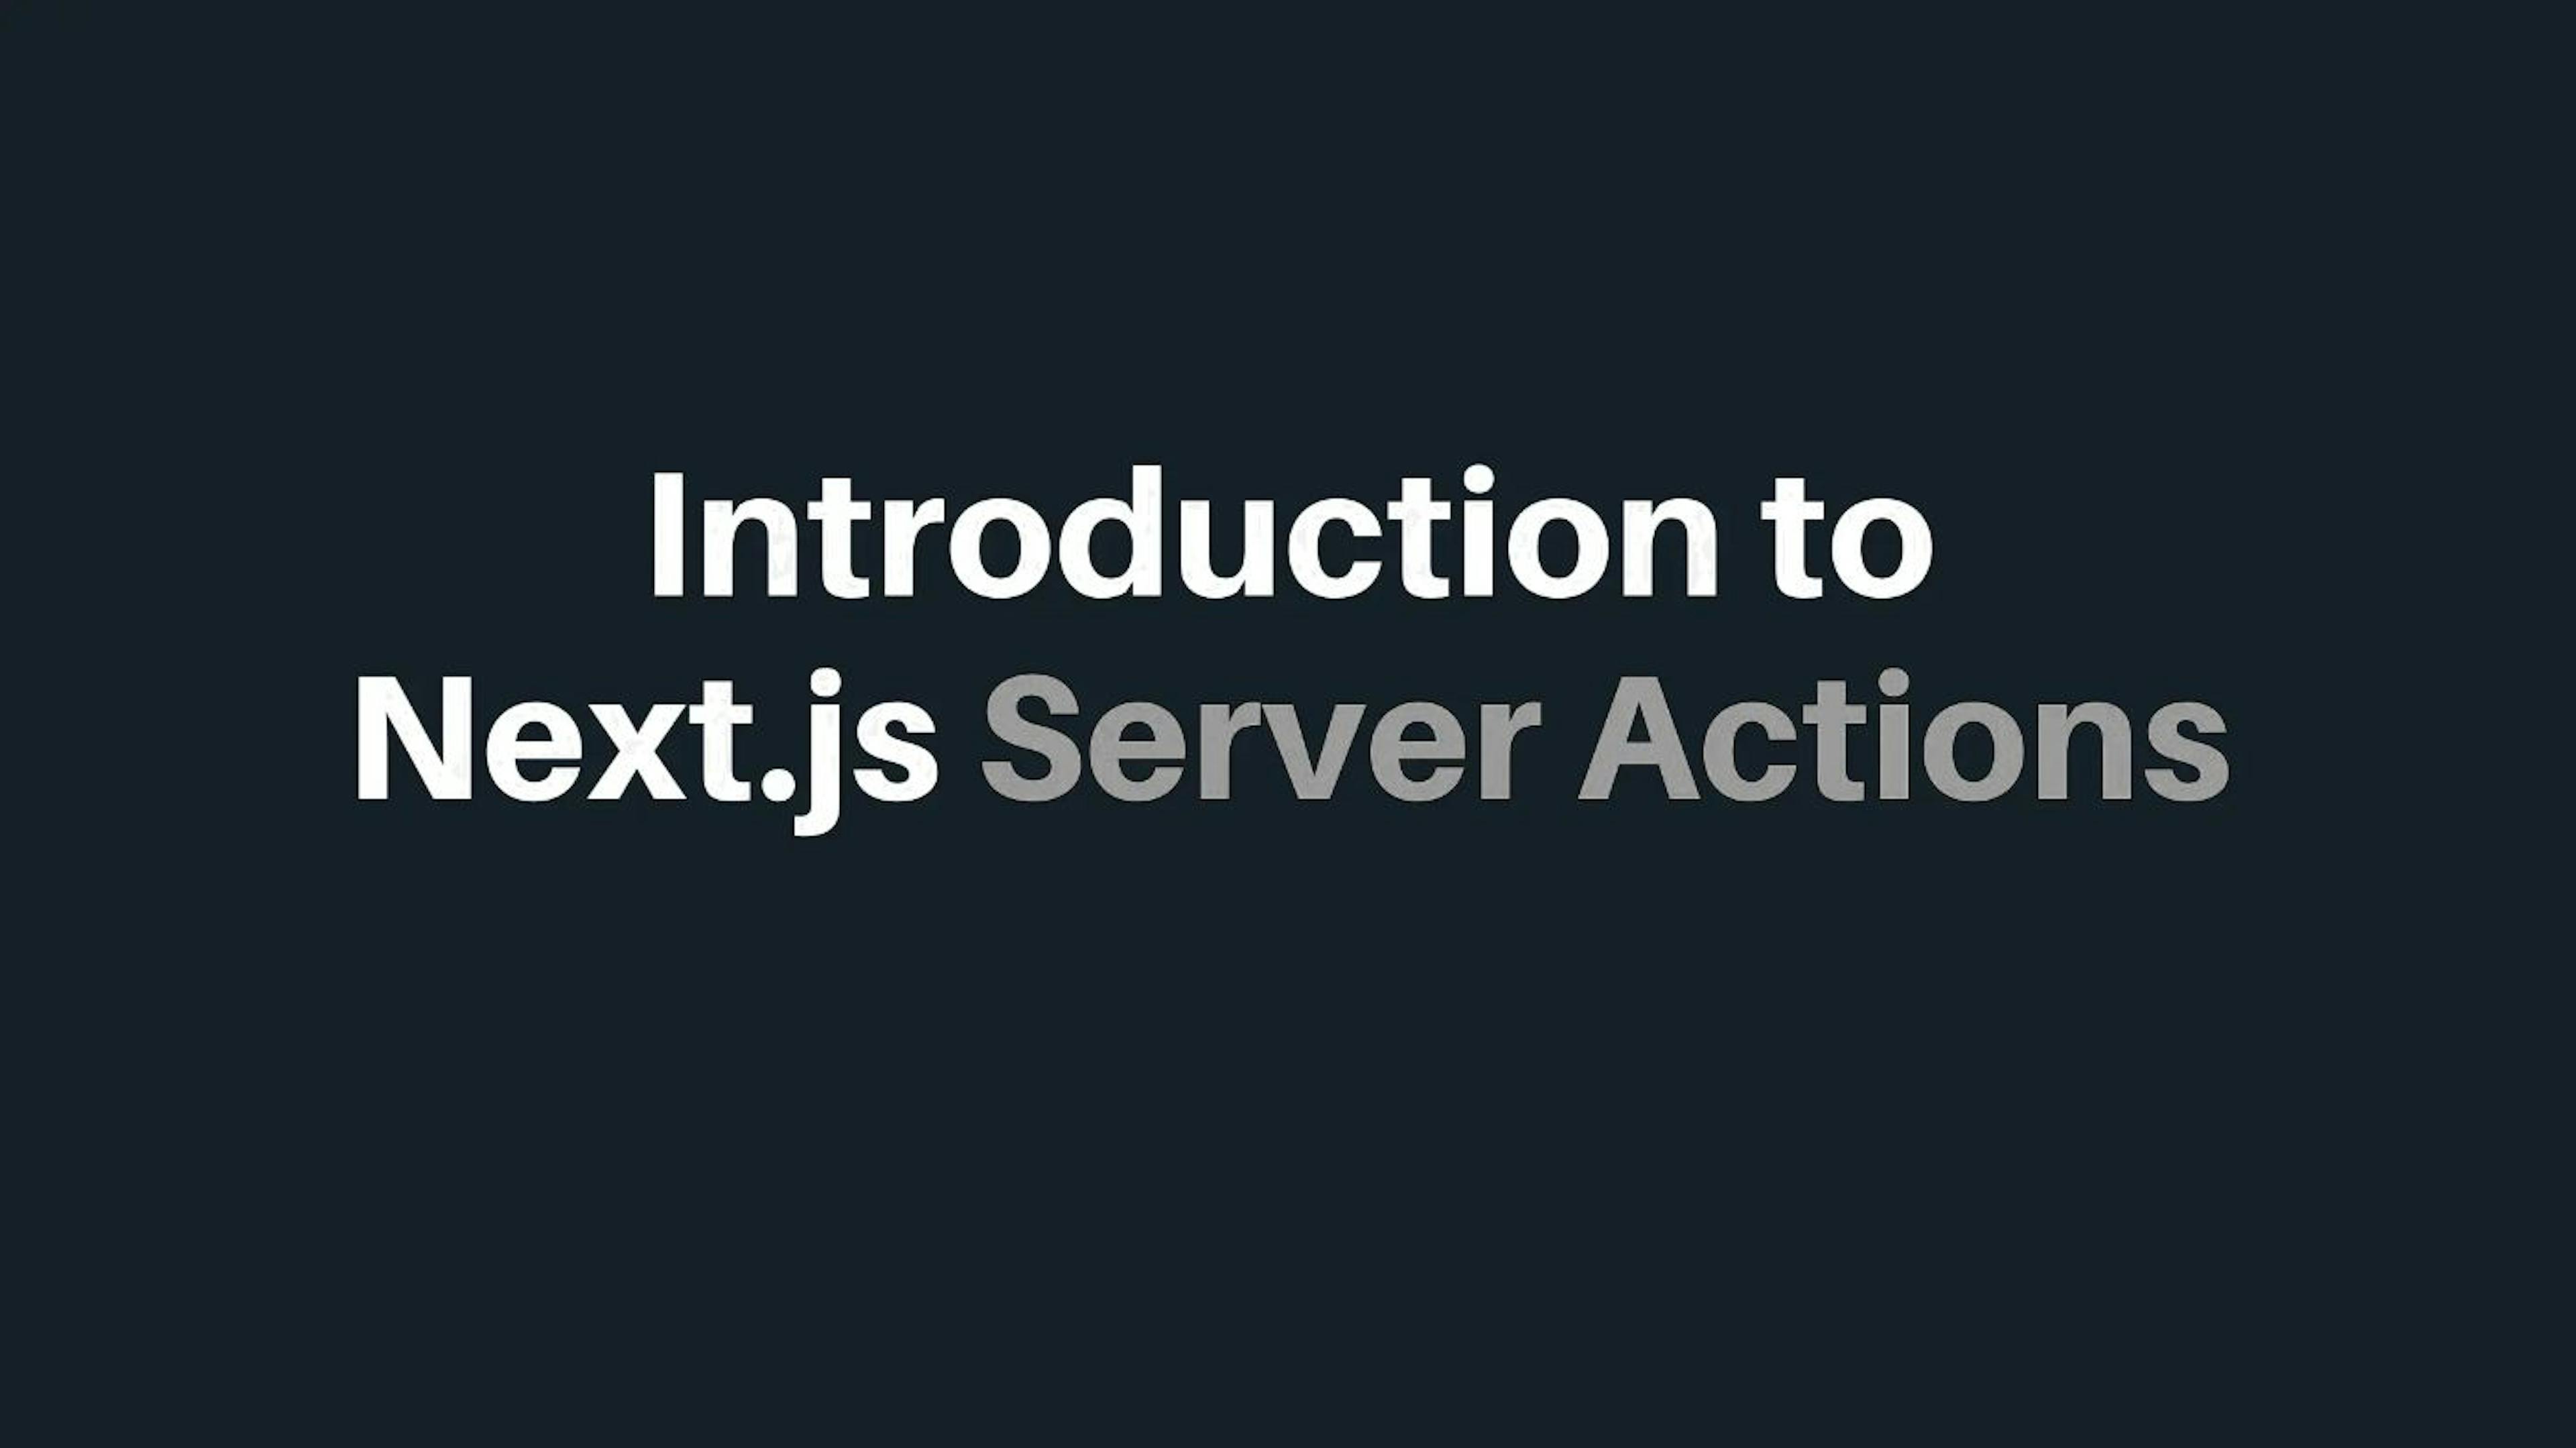 featured image - Xây dựng ứng dụng thời gian thực với Next.js 13.4 Server Actions

 1. Giới thiệu](#...